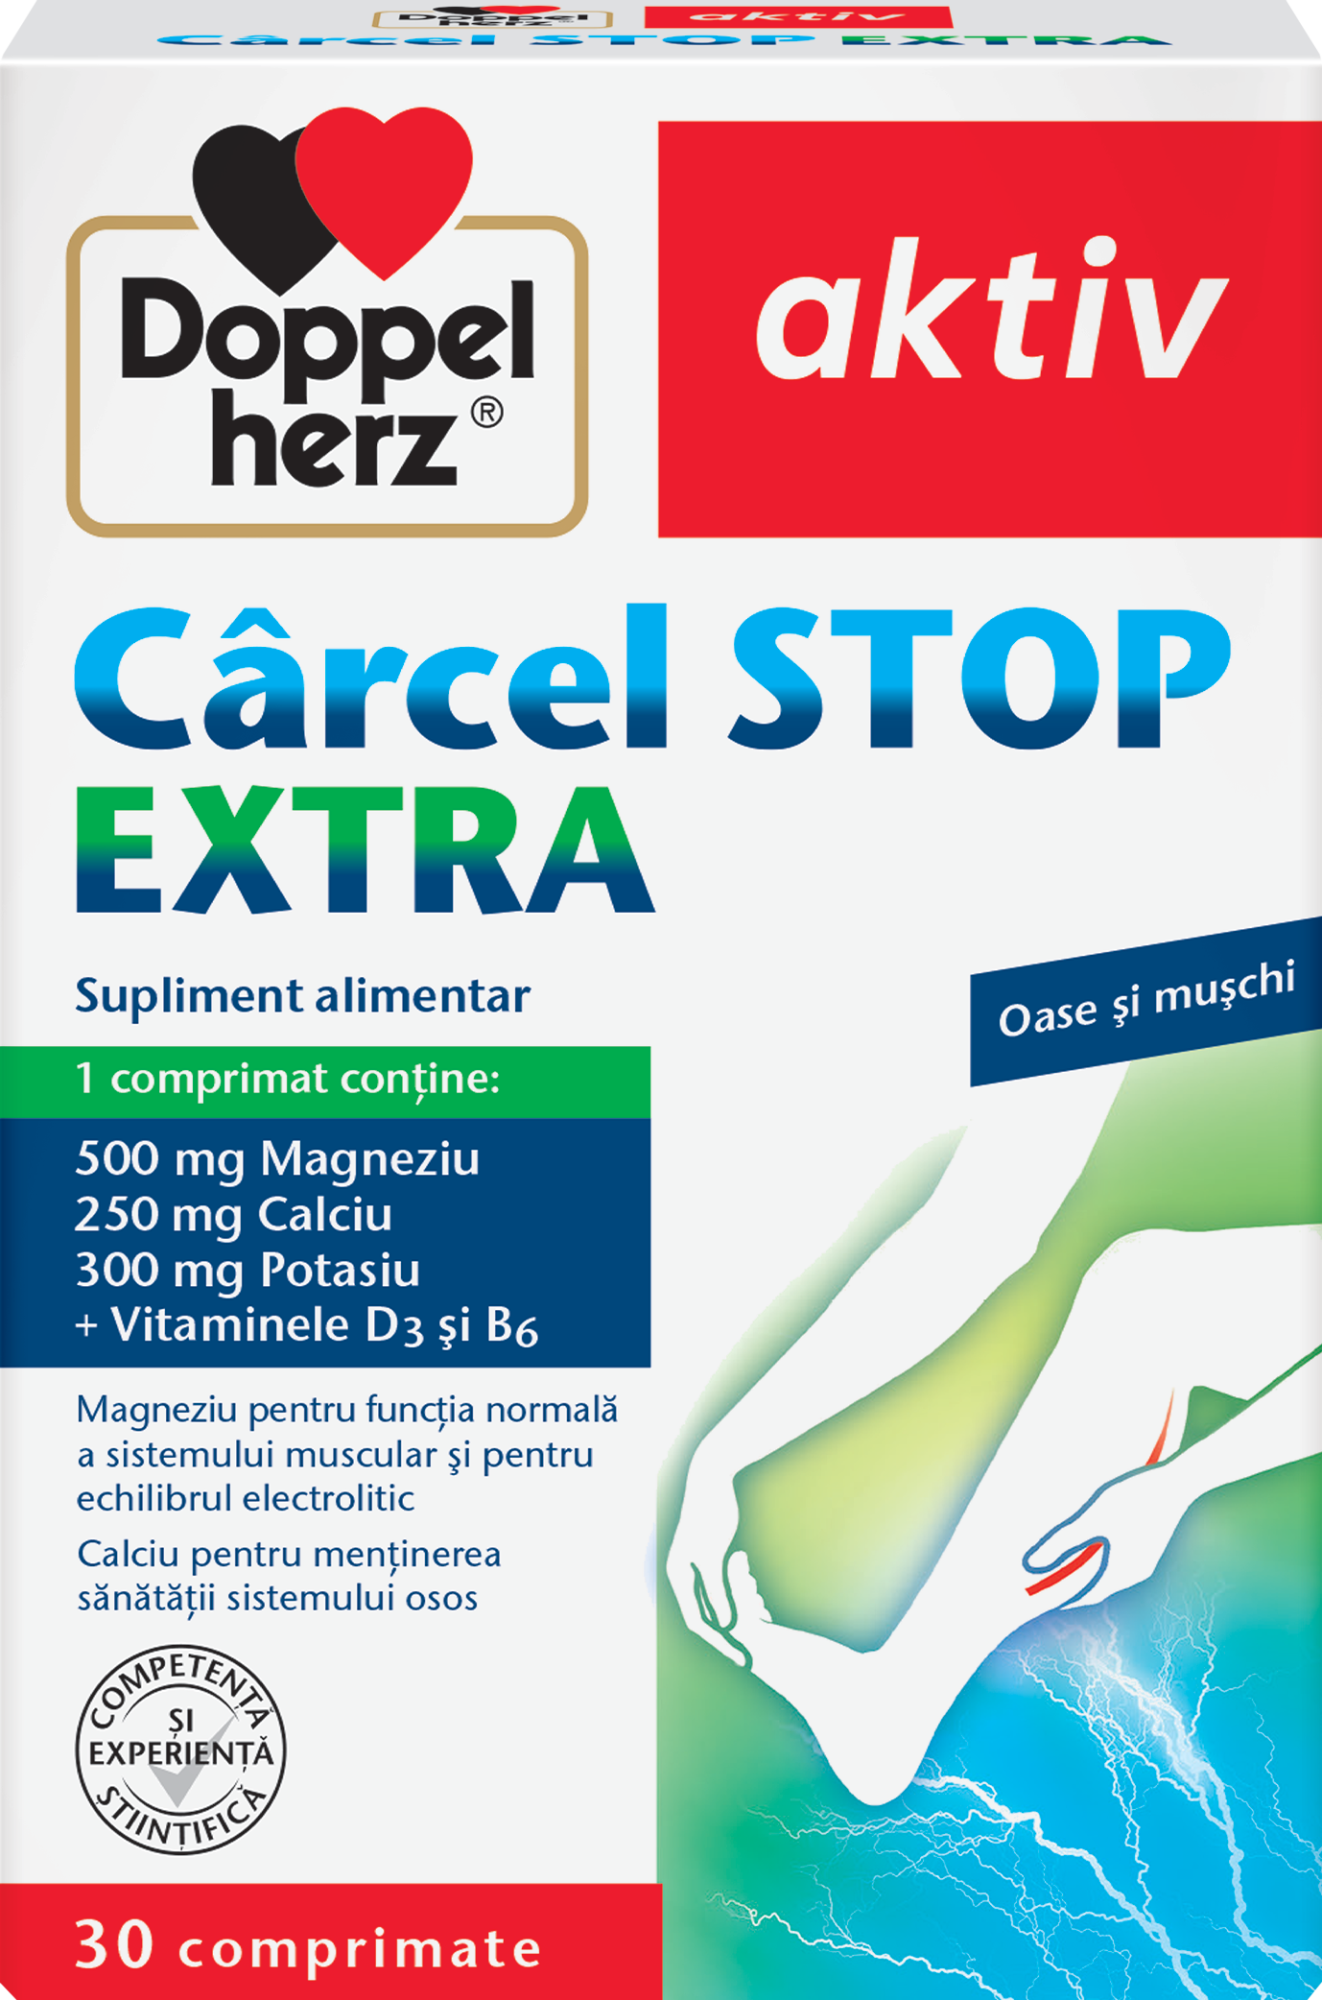 Doppelherz Aktiv Carcel Stop Extra 30 comprimate